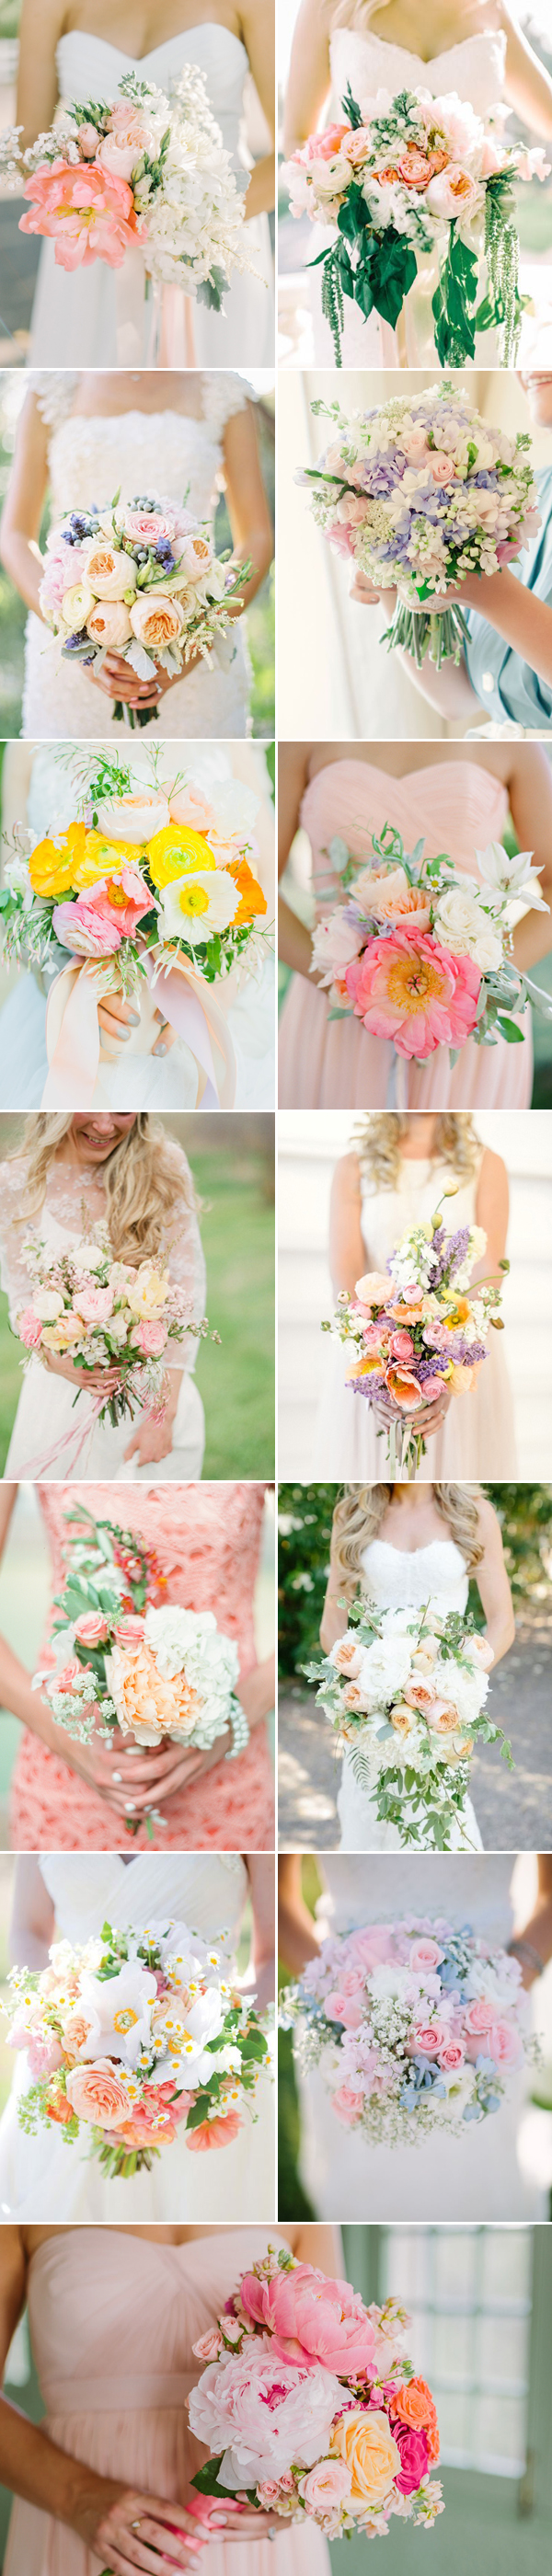 Romantic Spring Pastel Wedding Bouquets